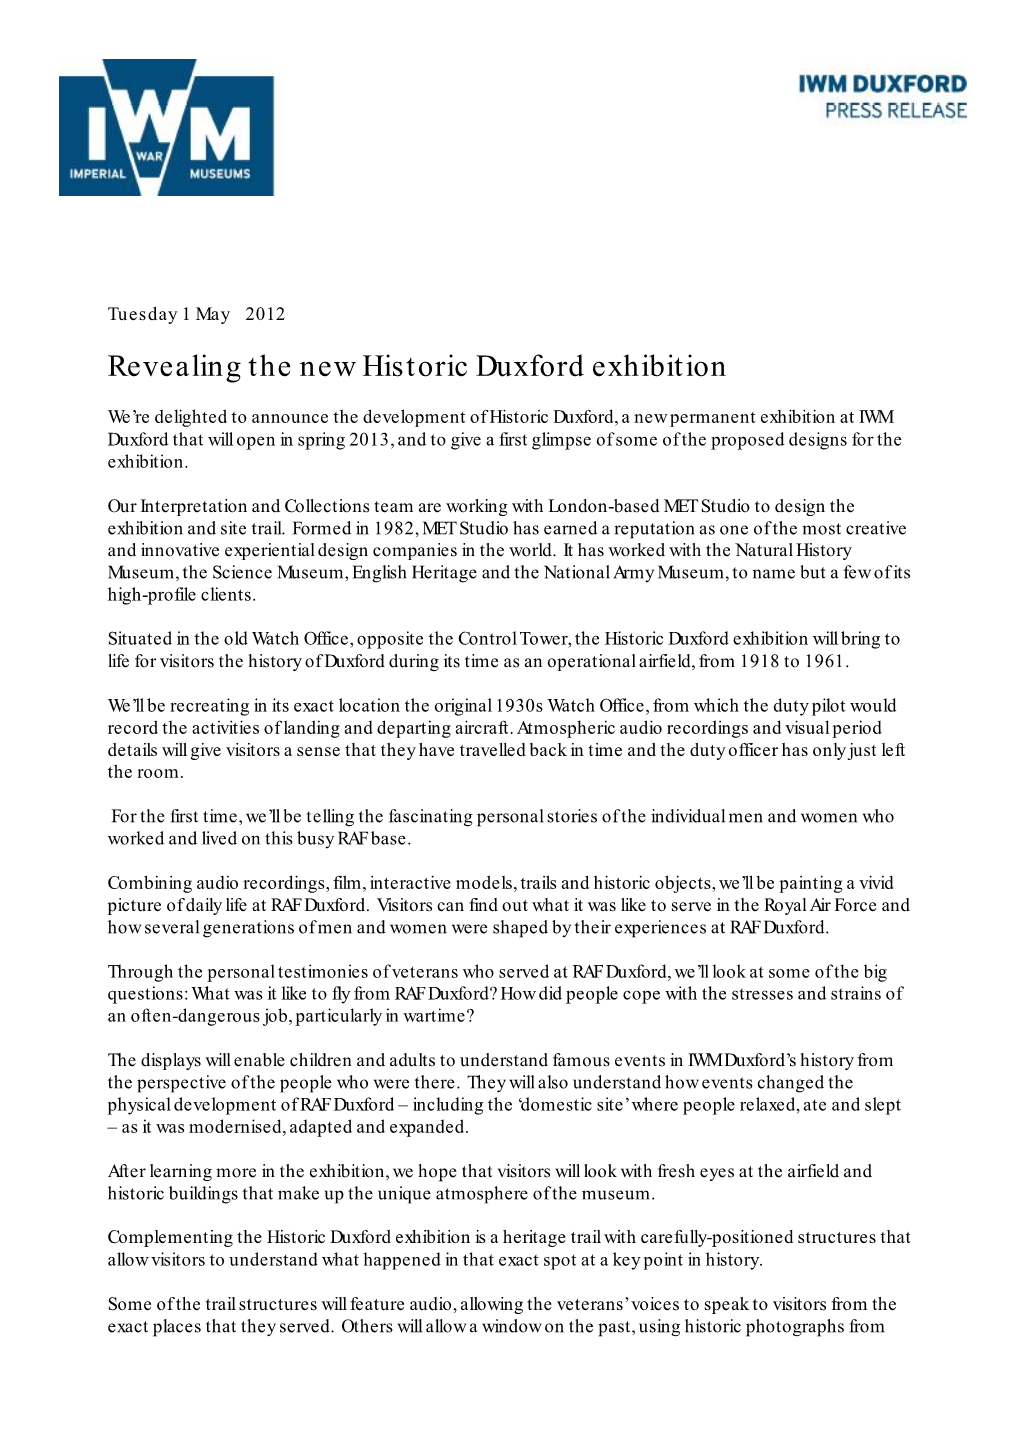 PRESS RELEASE Announcing Historic Duxford